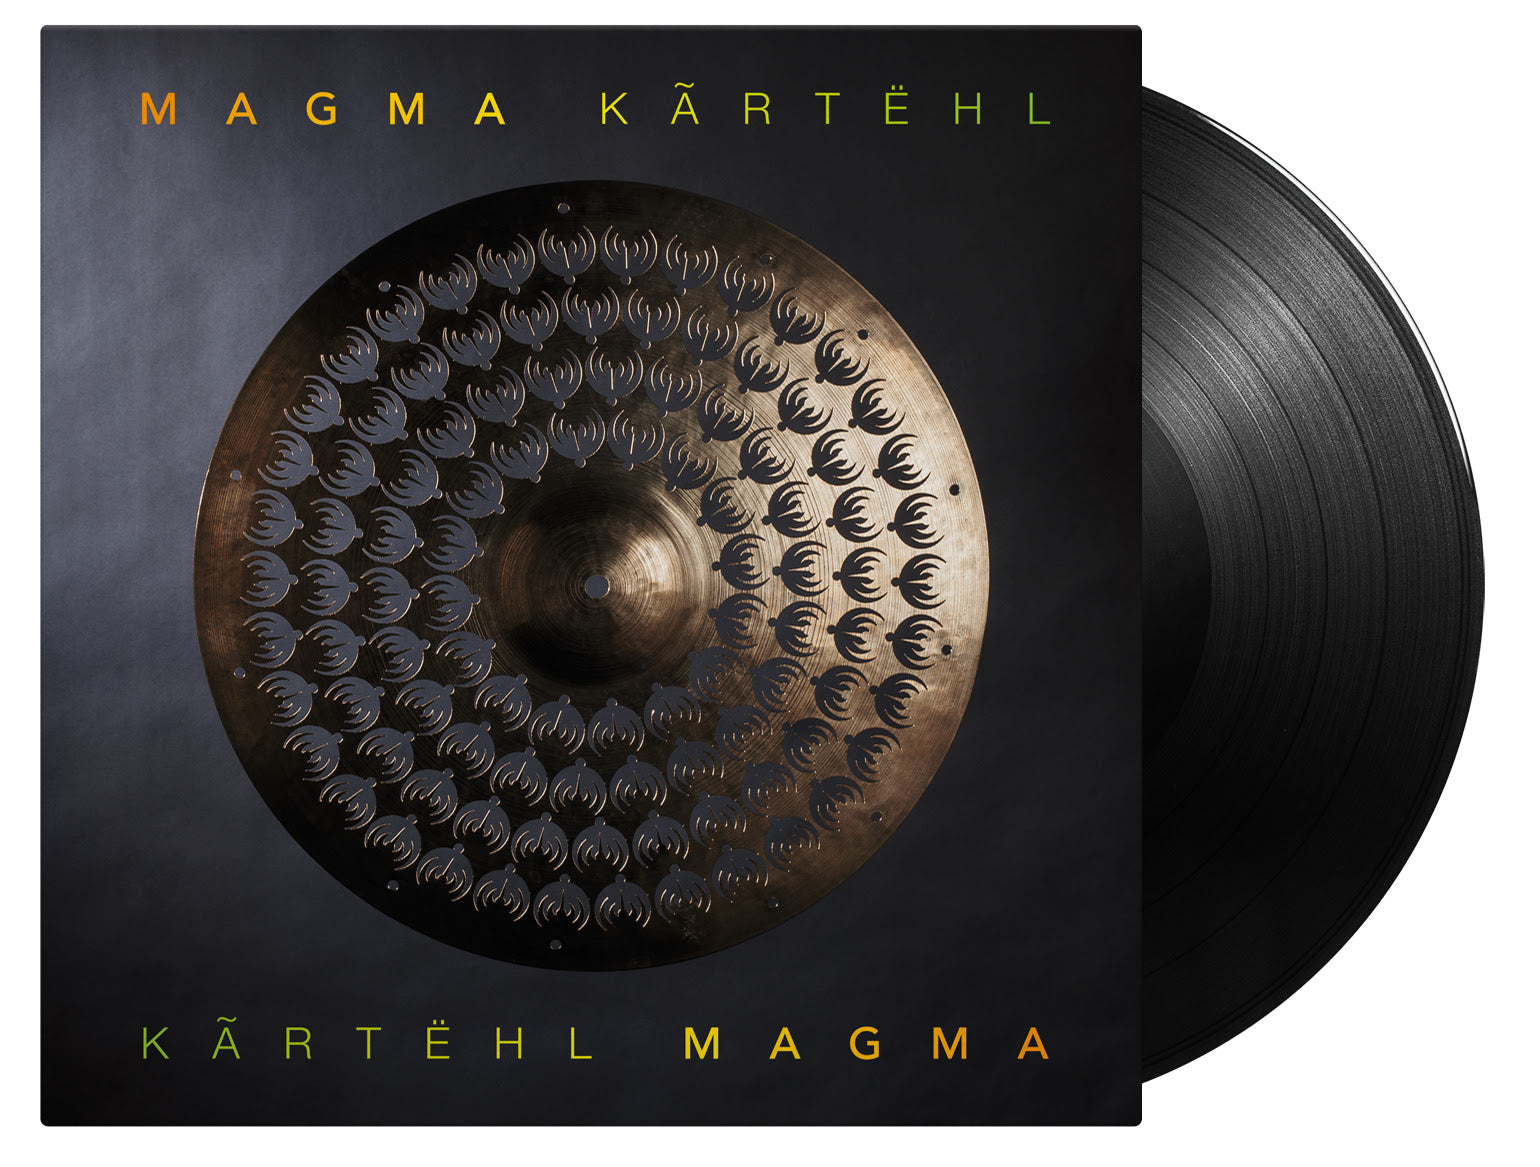  |  Vinyl LP | Magma - Kartehl (2 LPs) | Records on Vinyl